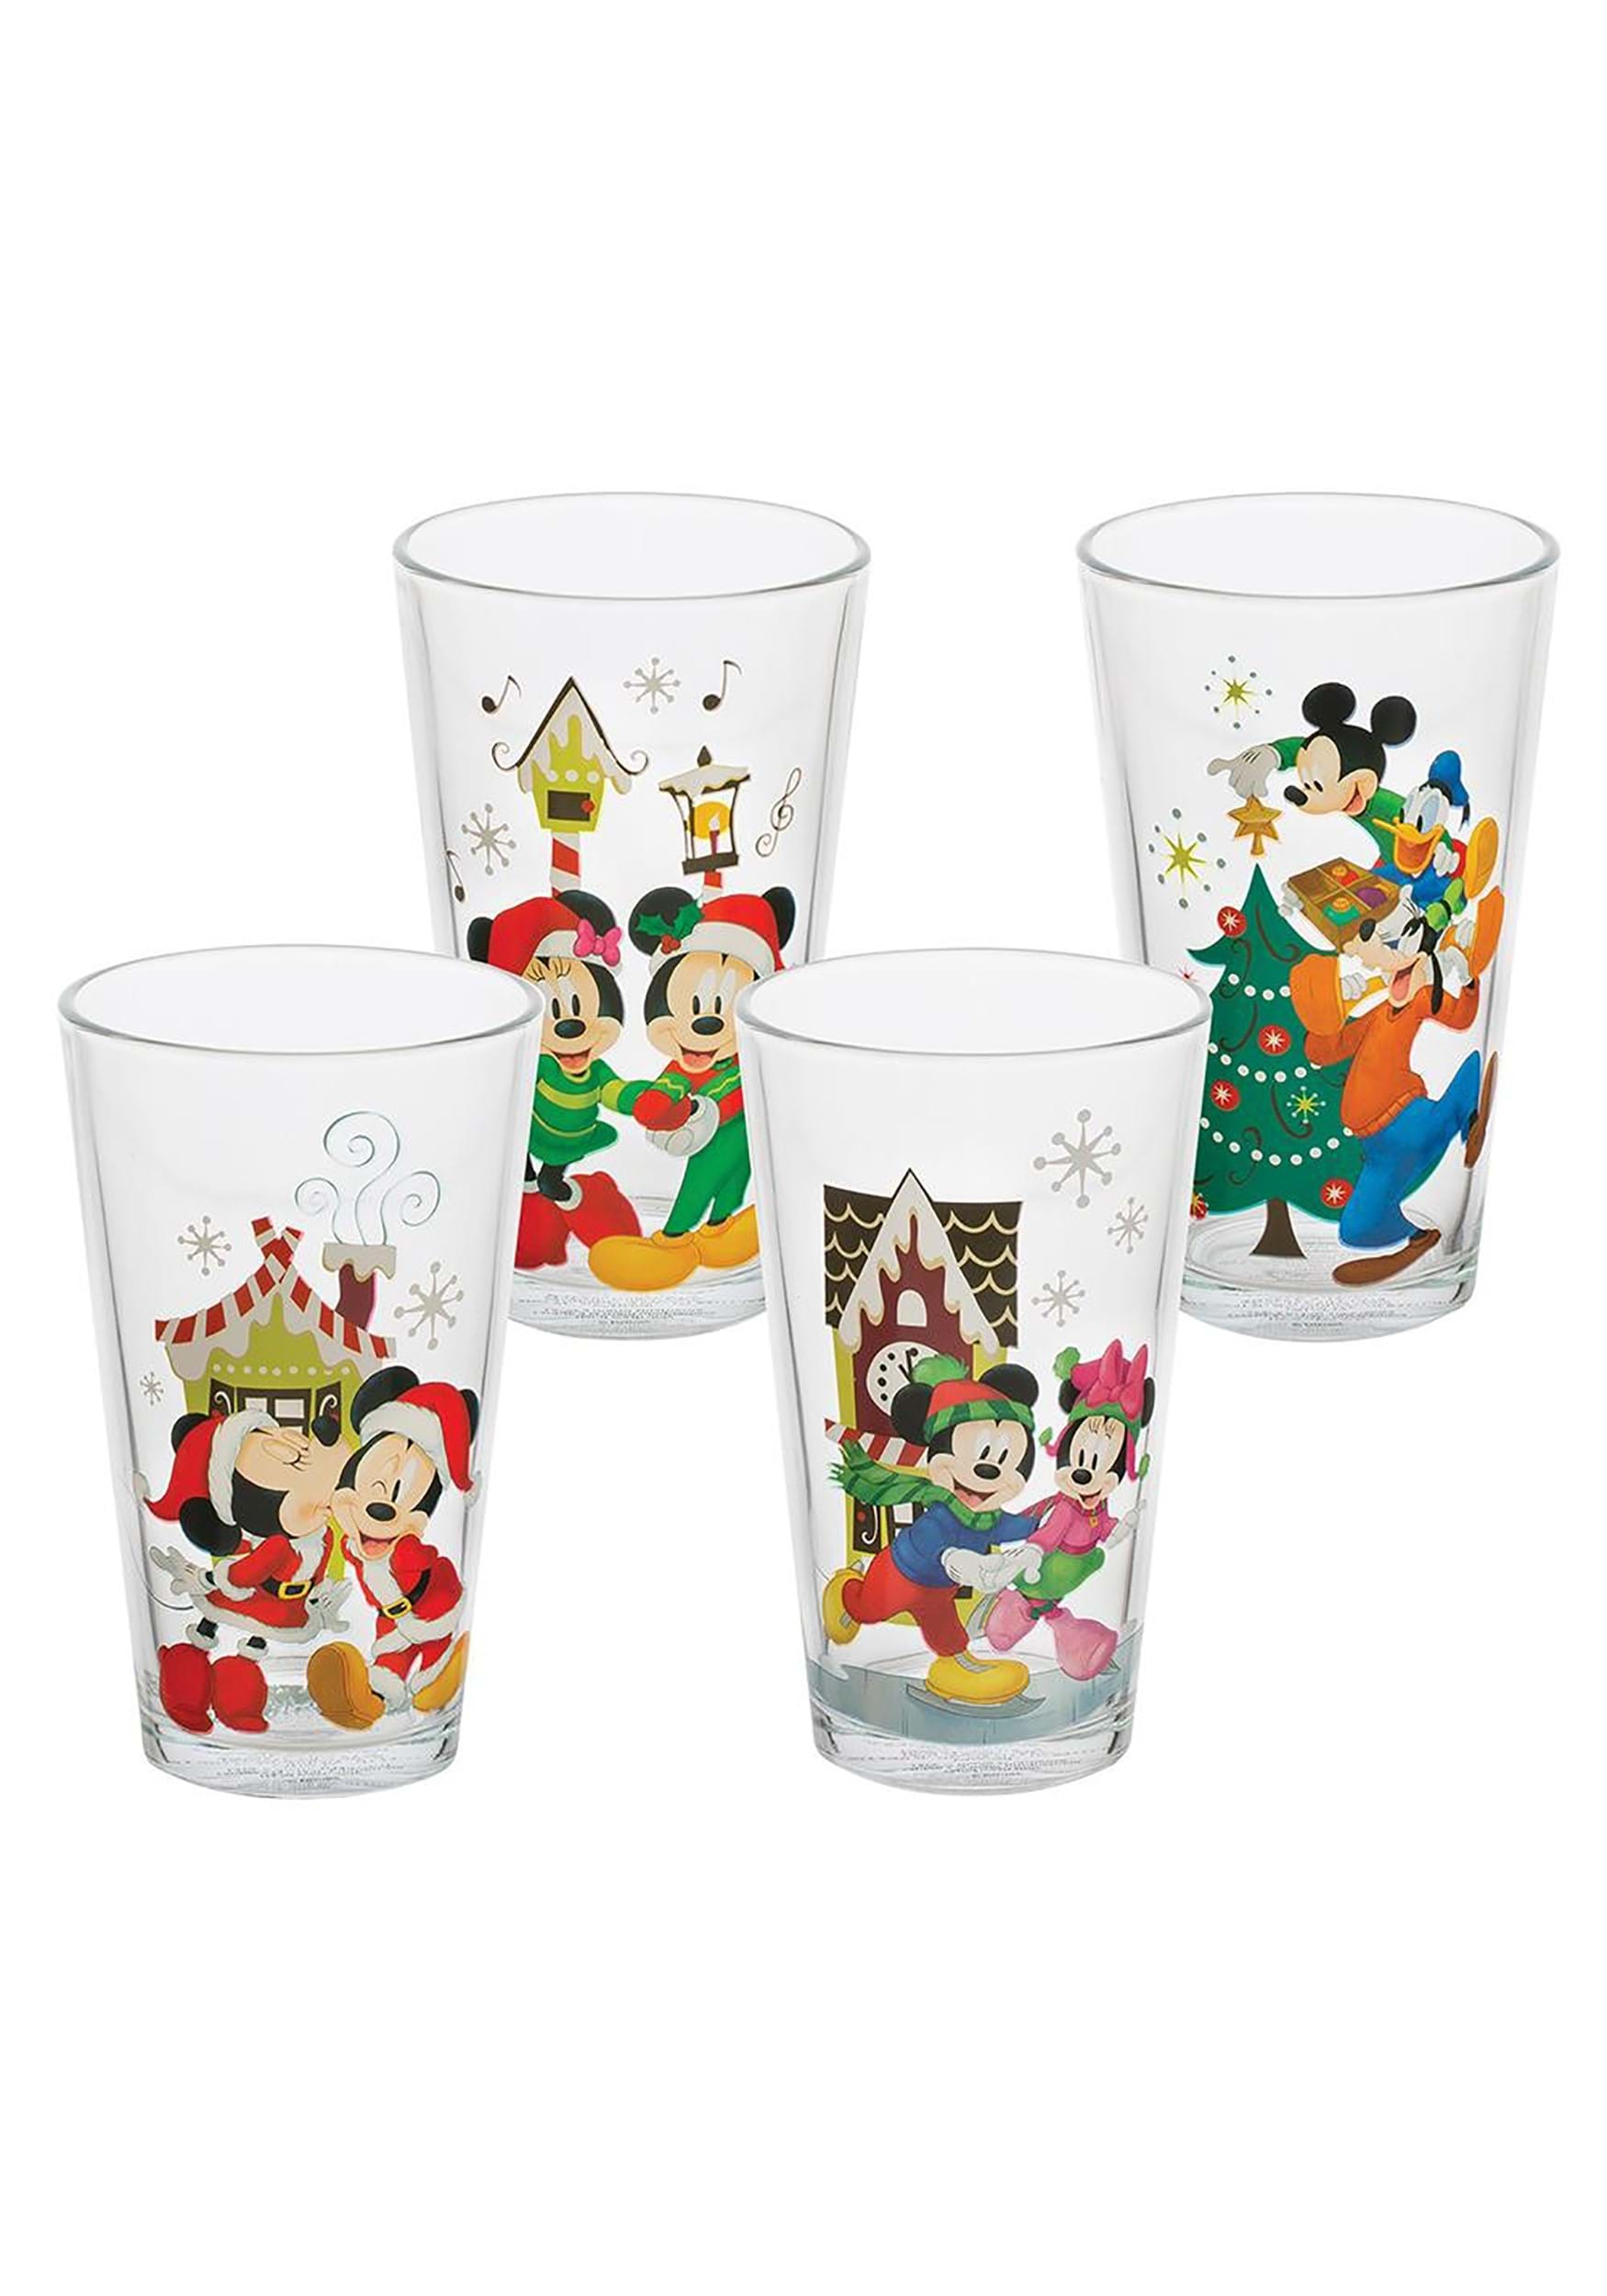 https://images.fun.com/products/67849/2-1-169849/disney-mickey-minnie-holiday-16-oz-glasses--se-alt-1.jpg